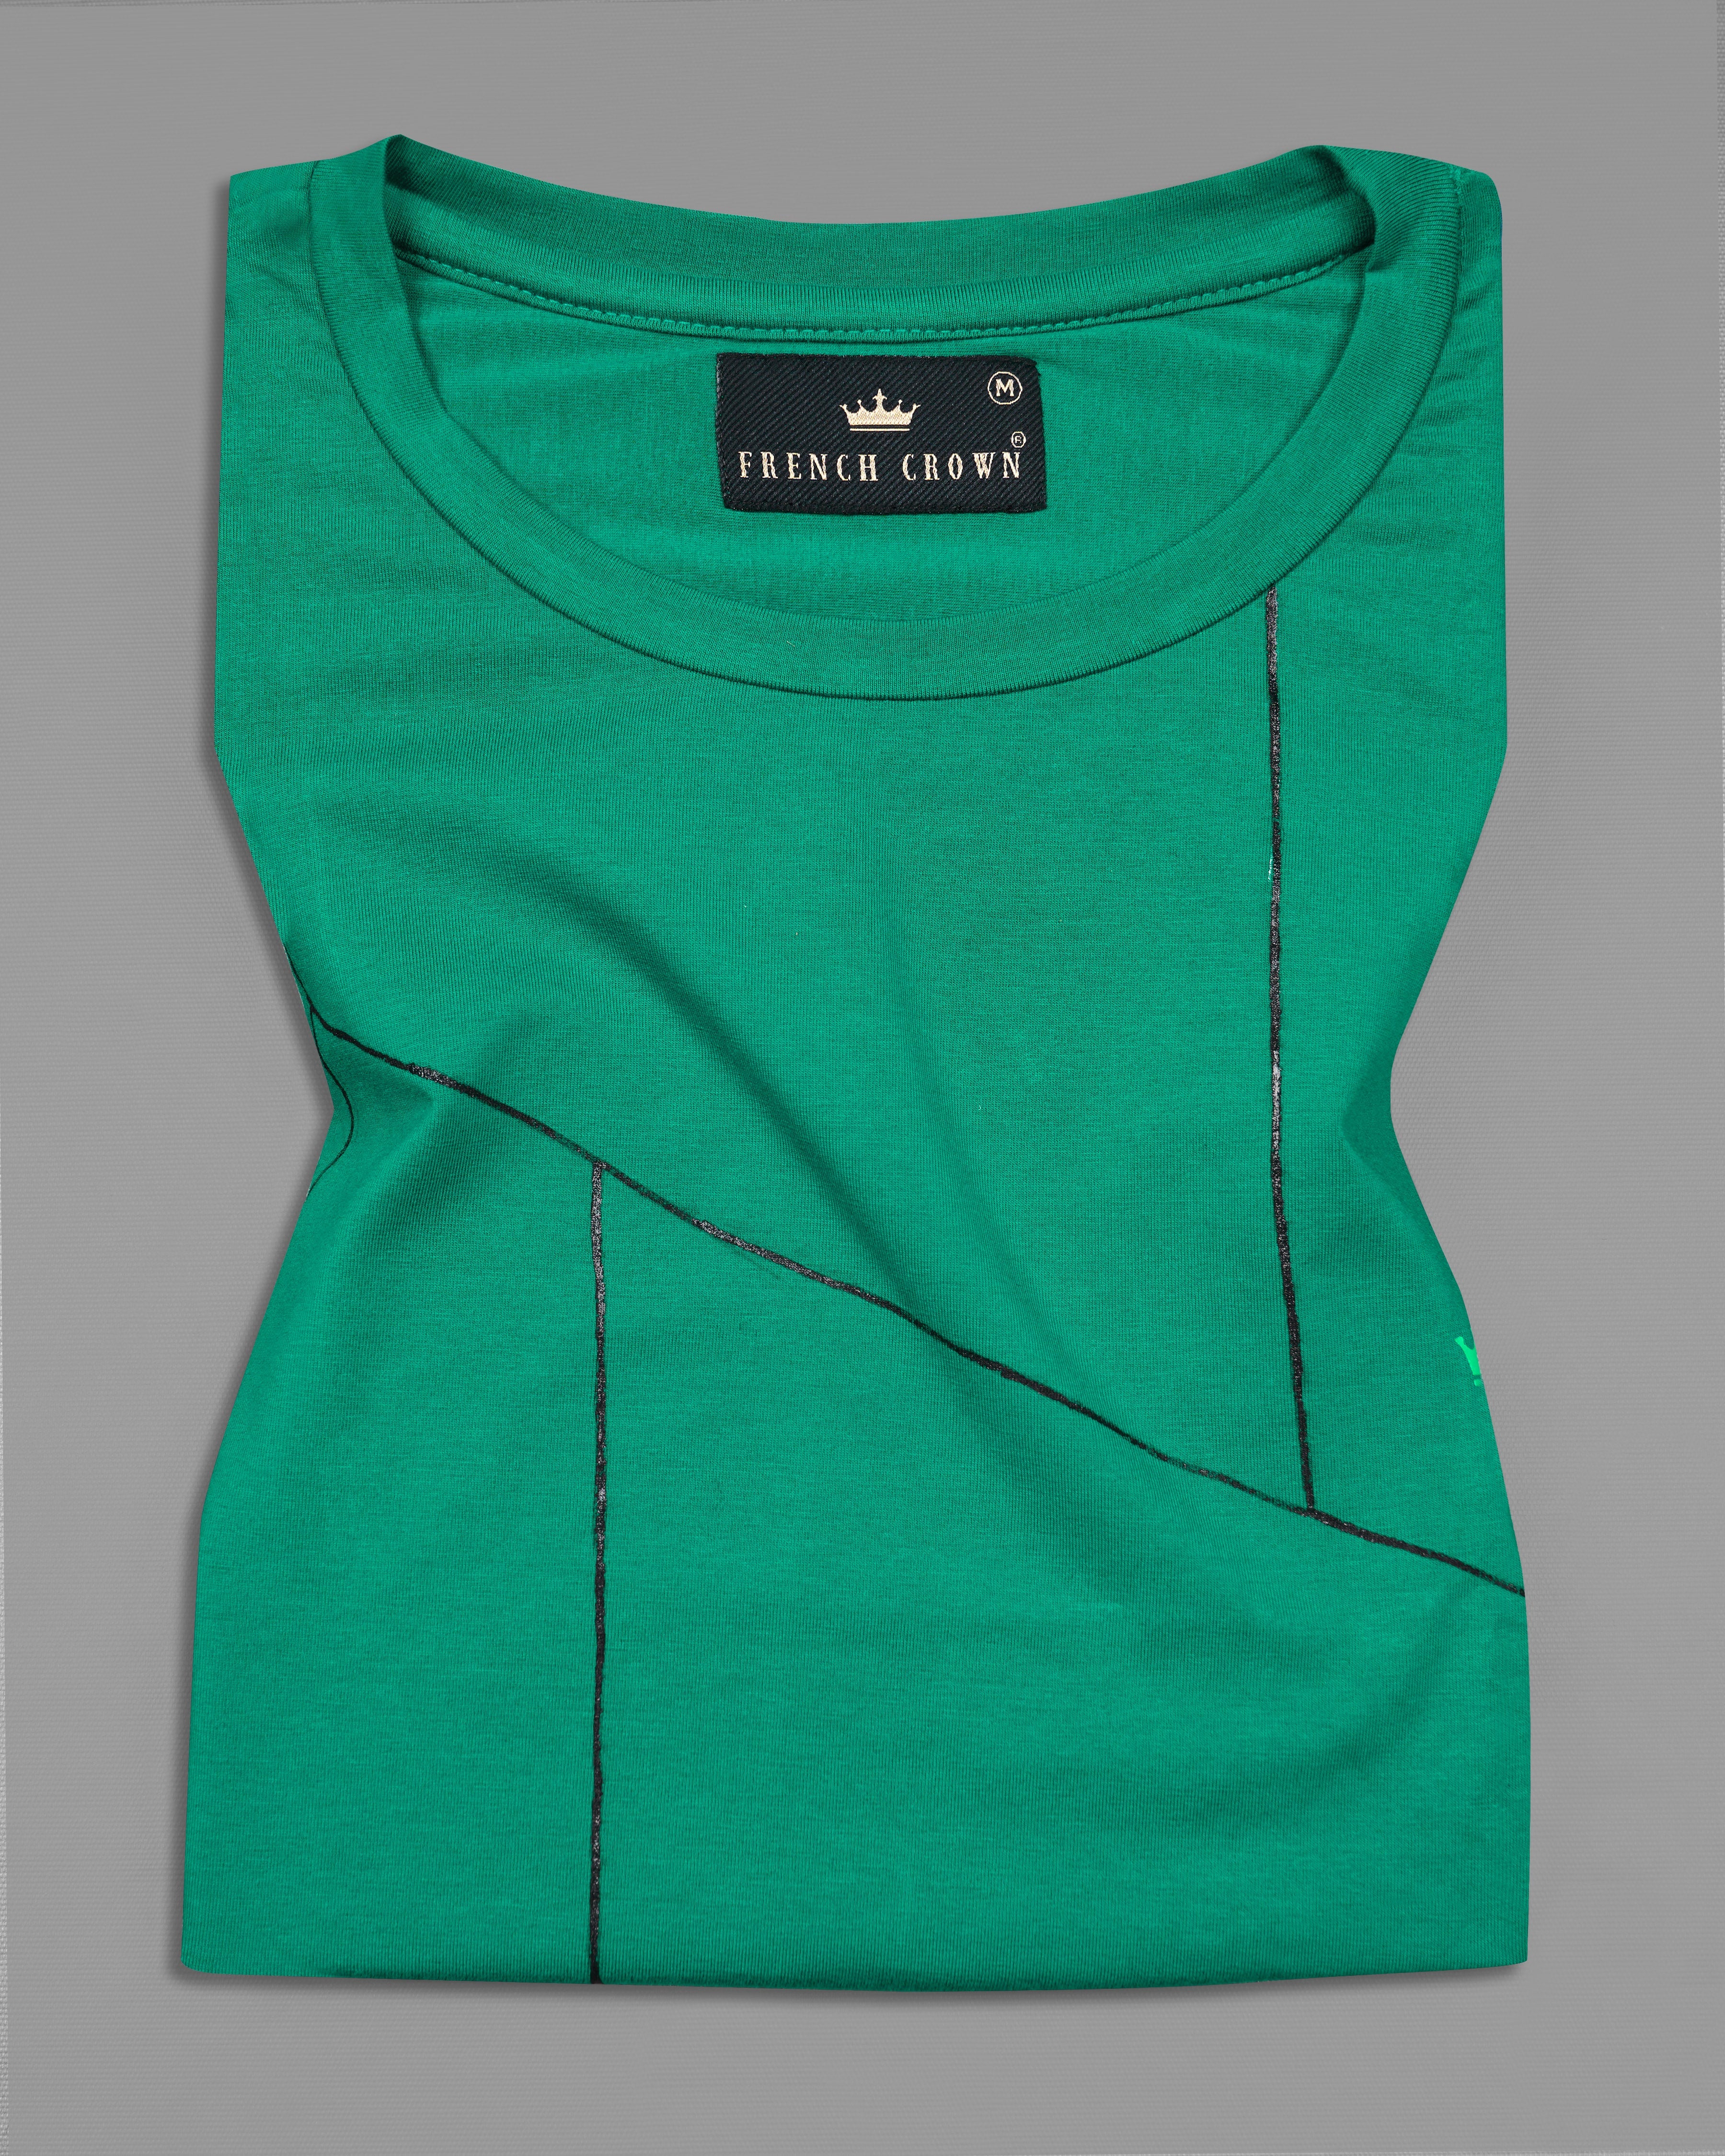 Tropical Green Geometric Hand Painted Premium Cotton T-shirt TS005-W007-S, TS005-W007-M, TS005-W007-L, TS005-W007-XL, TS005-W007-XXL